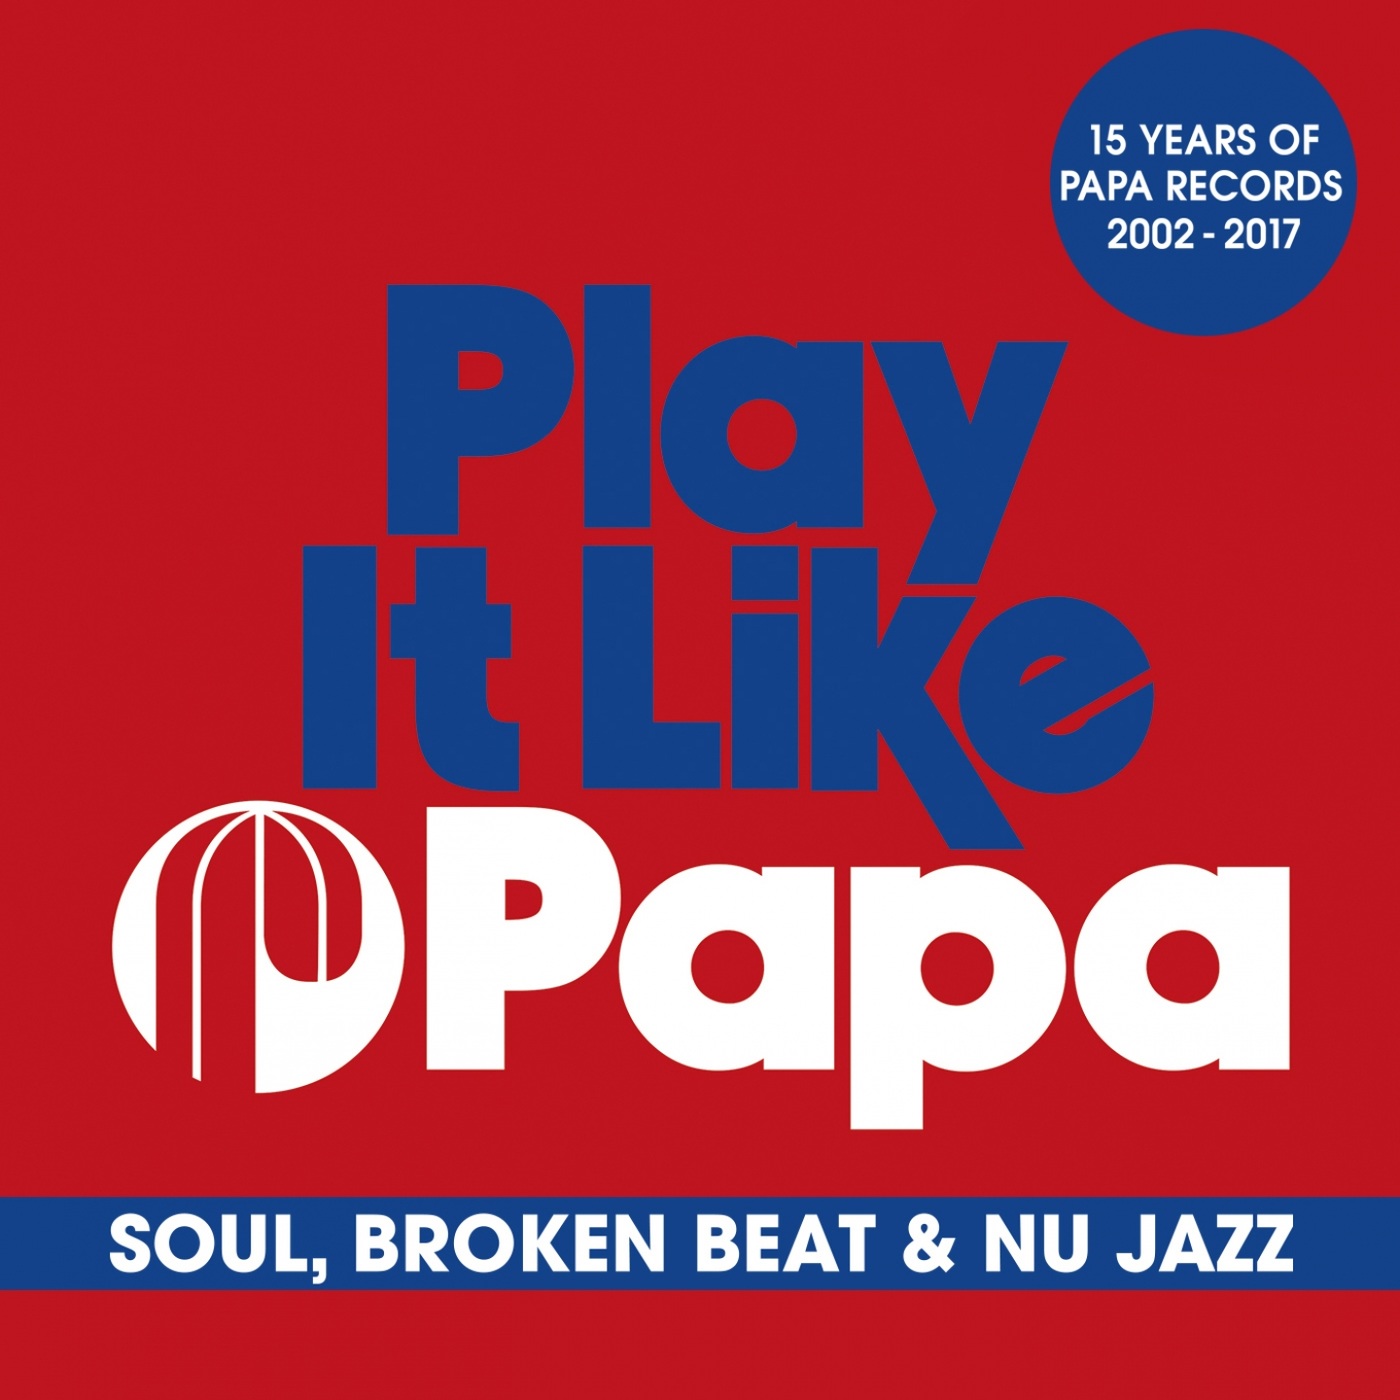 VA - Play It Like Papa (15 Years of Papa Records 2002 - 2017) (Soul, Broken Beat & Nu Jazz) / Papa Records